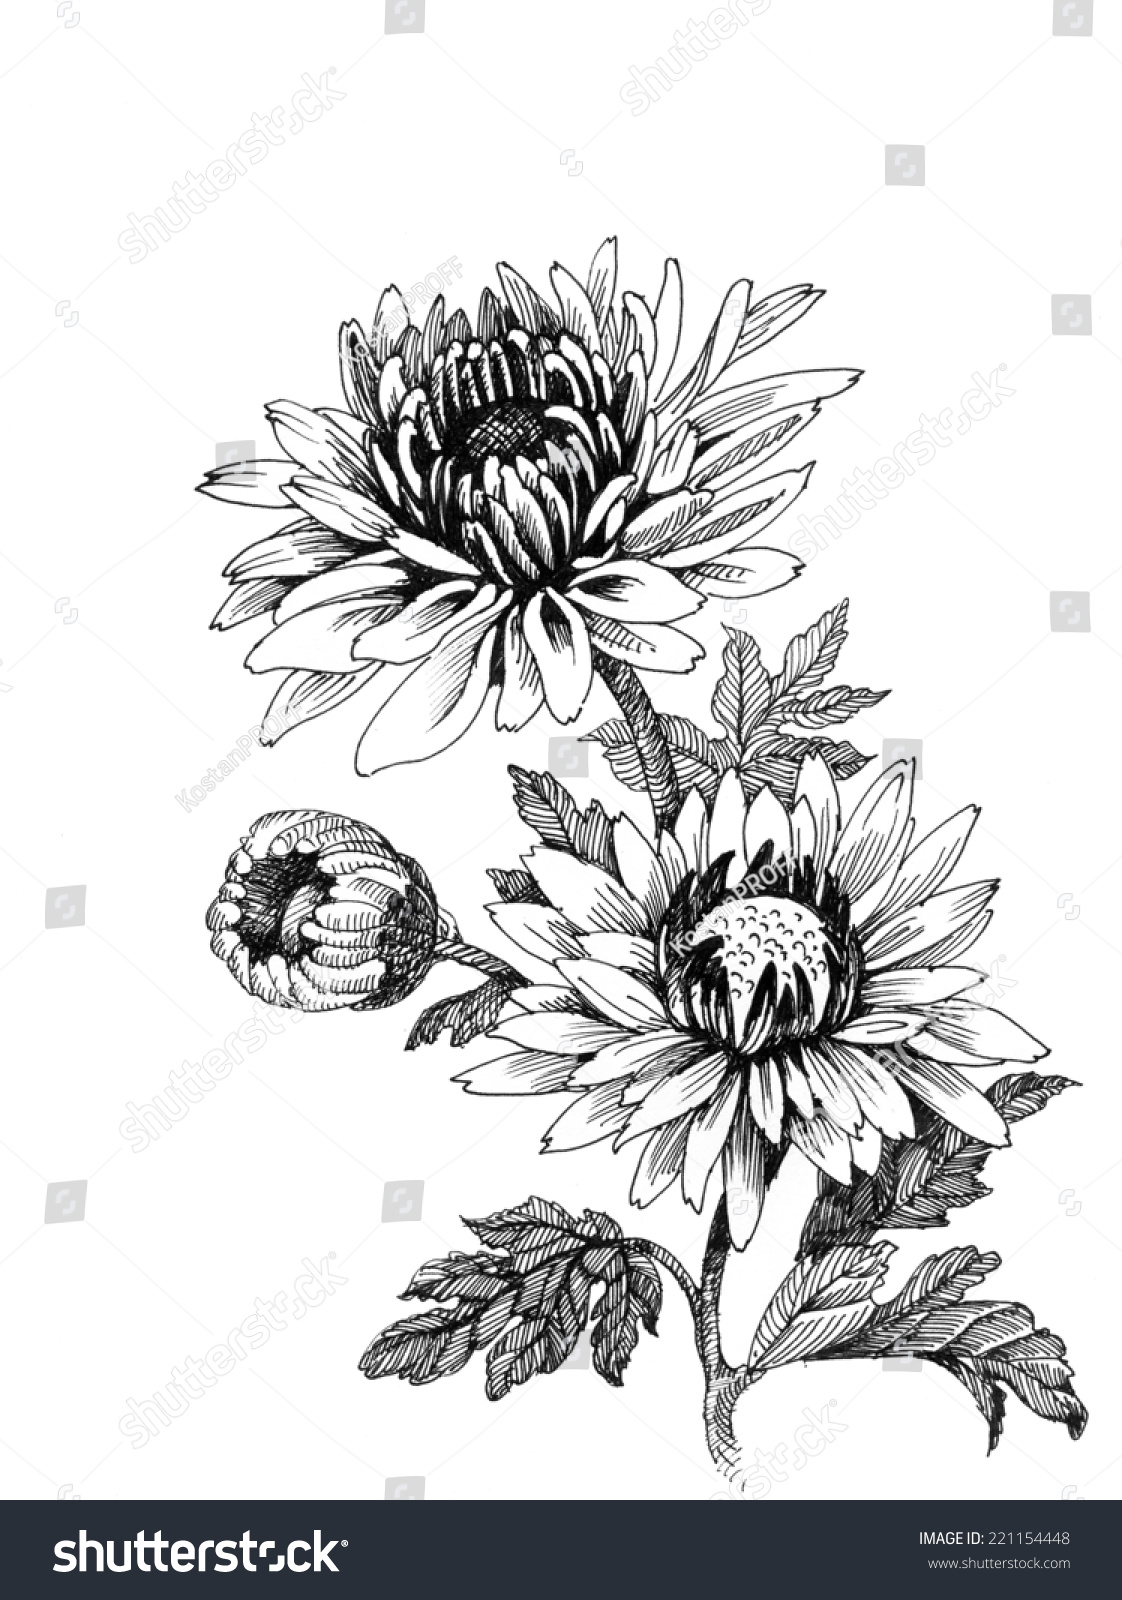 Chrysanthemum Drawing Hand drawing chrysanthemum flower stock photo 